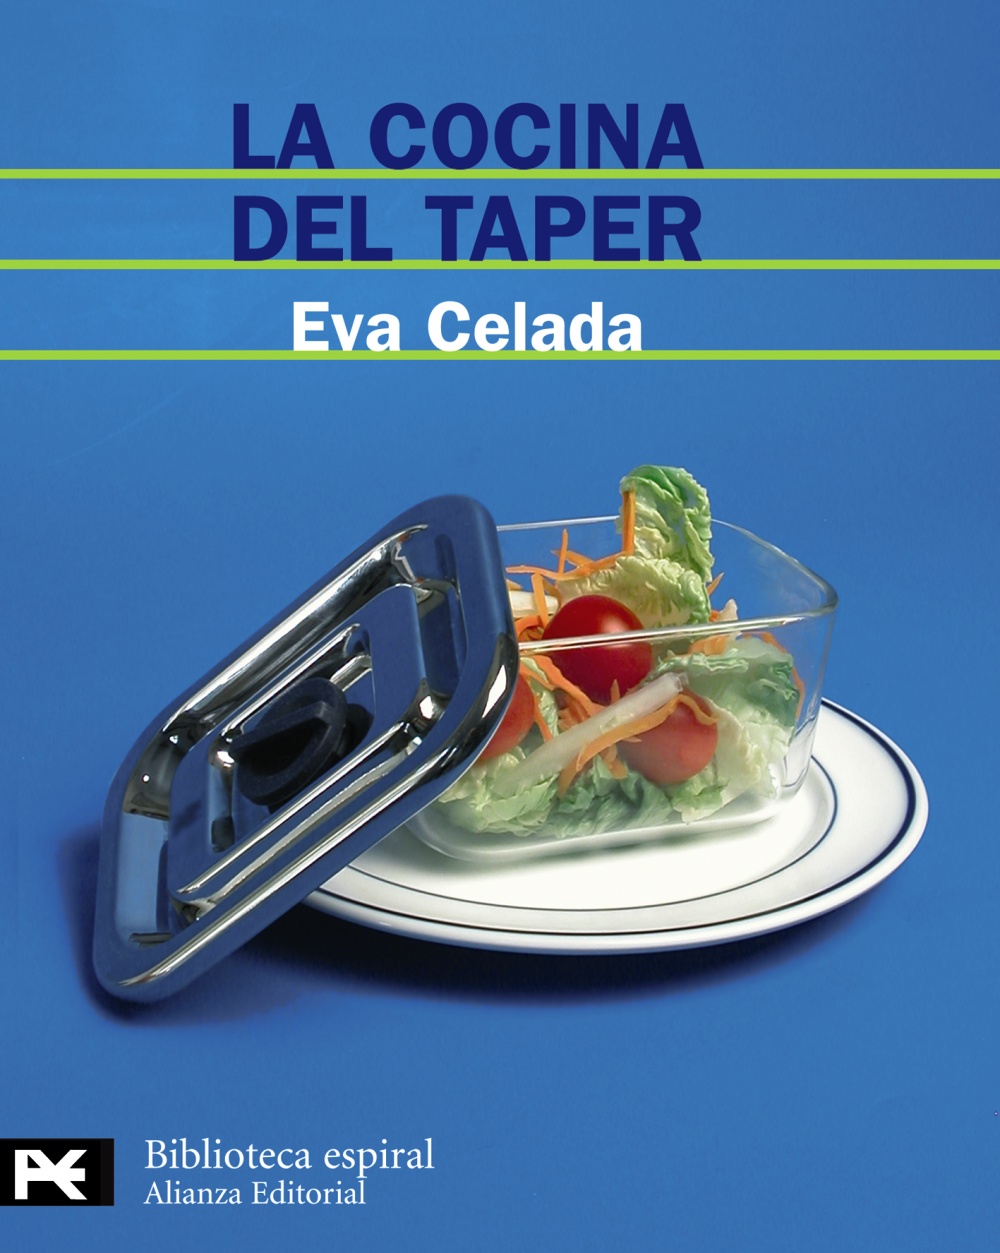 La cocina del taper - Eva Celada 9788420660837